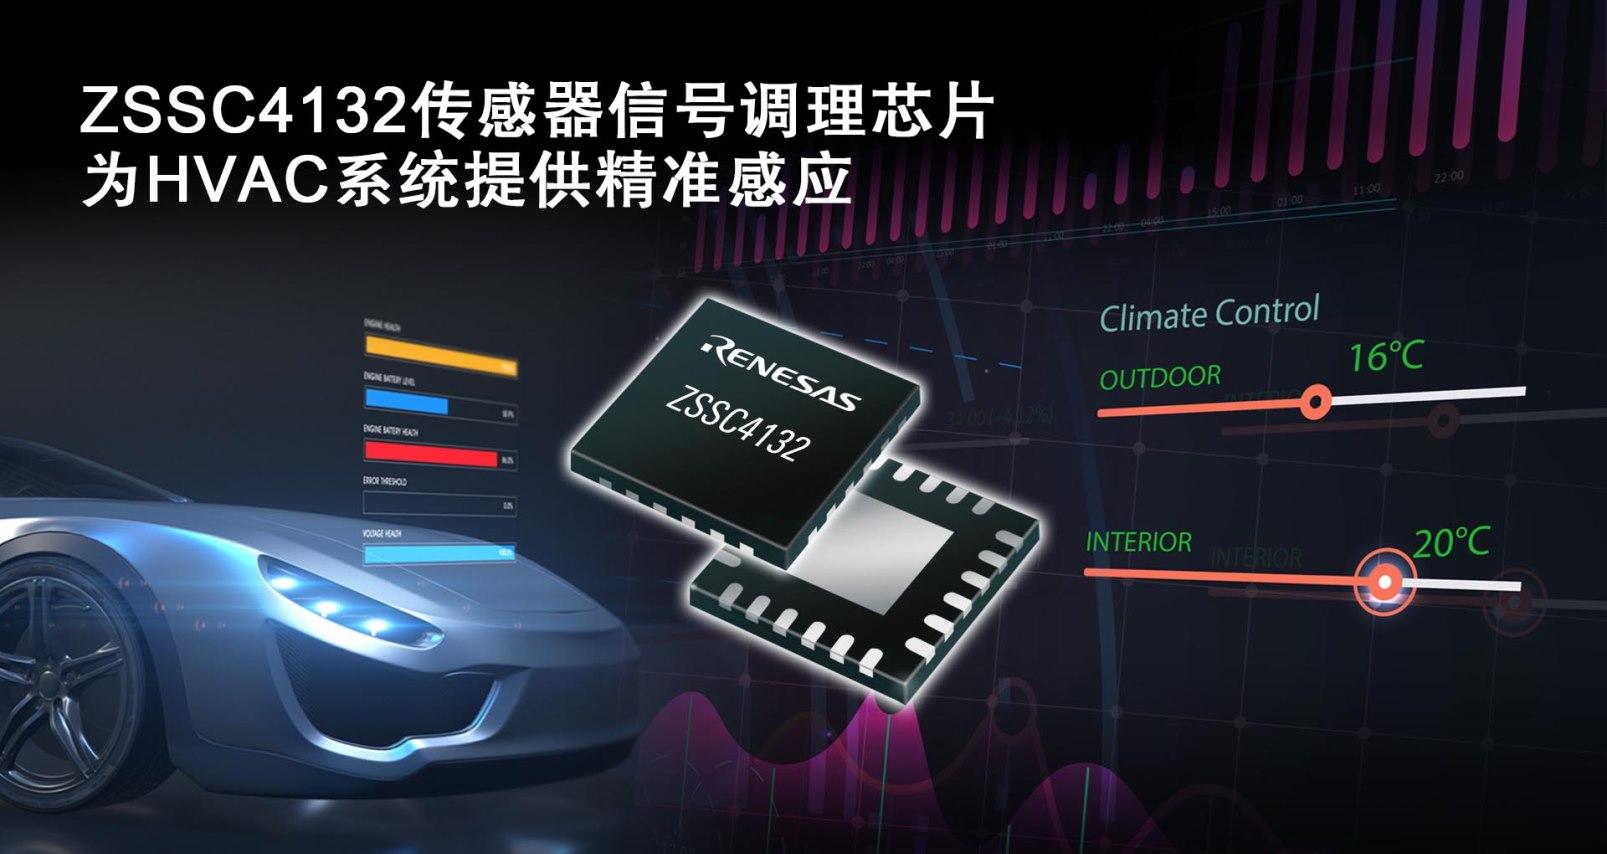 ZSSC4132传感器信号调理芯片为HVAC系统提供精准感应.jpg